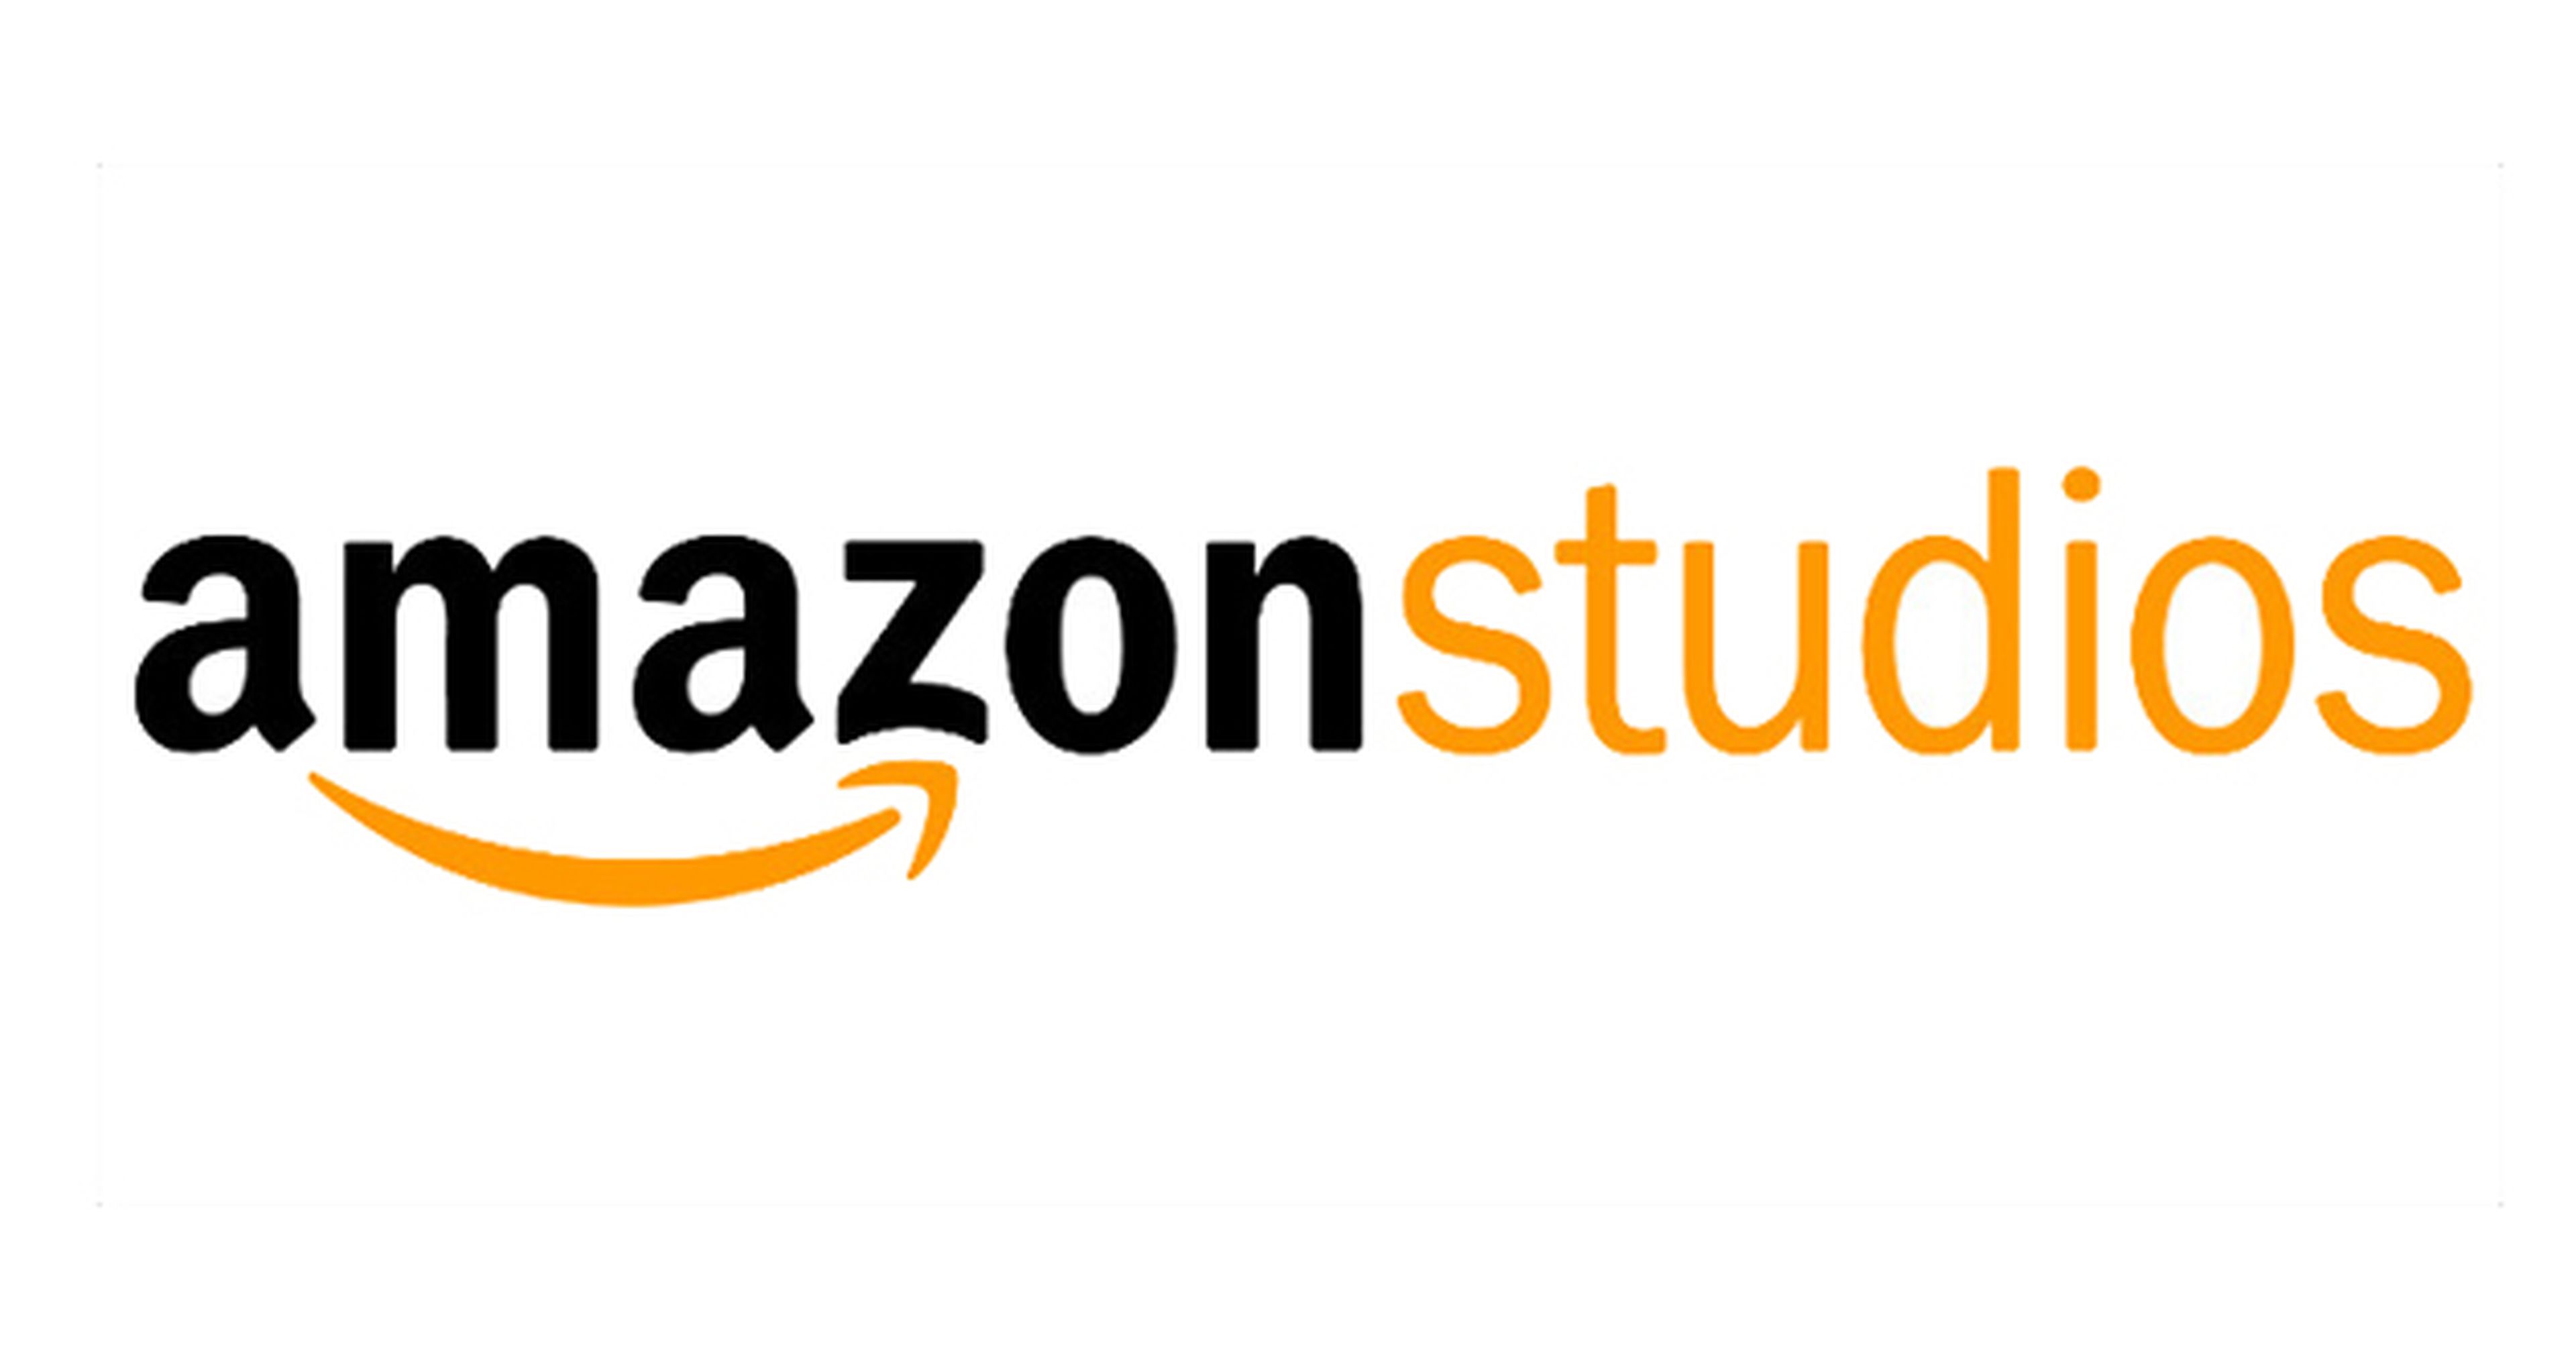 Las series de Amazon Studios